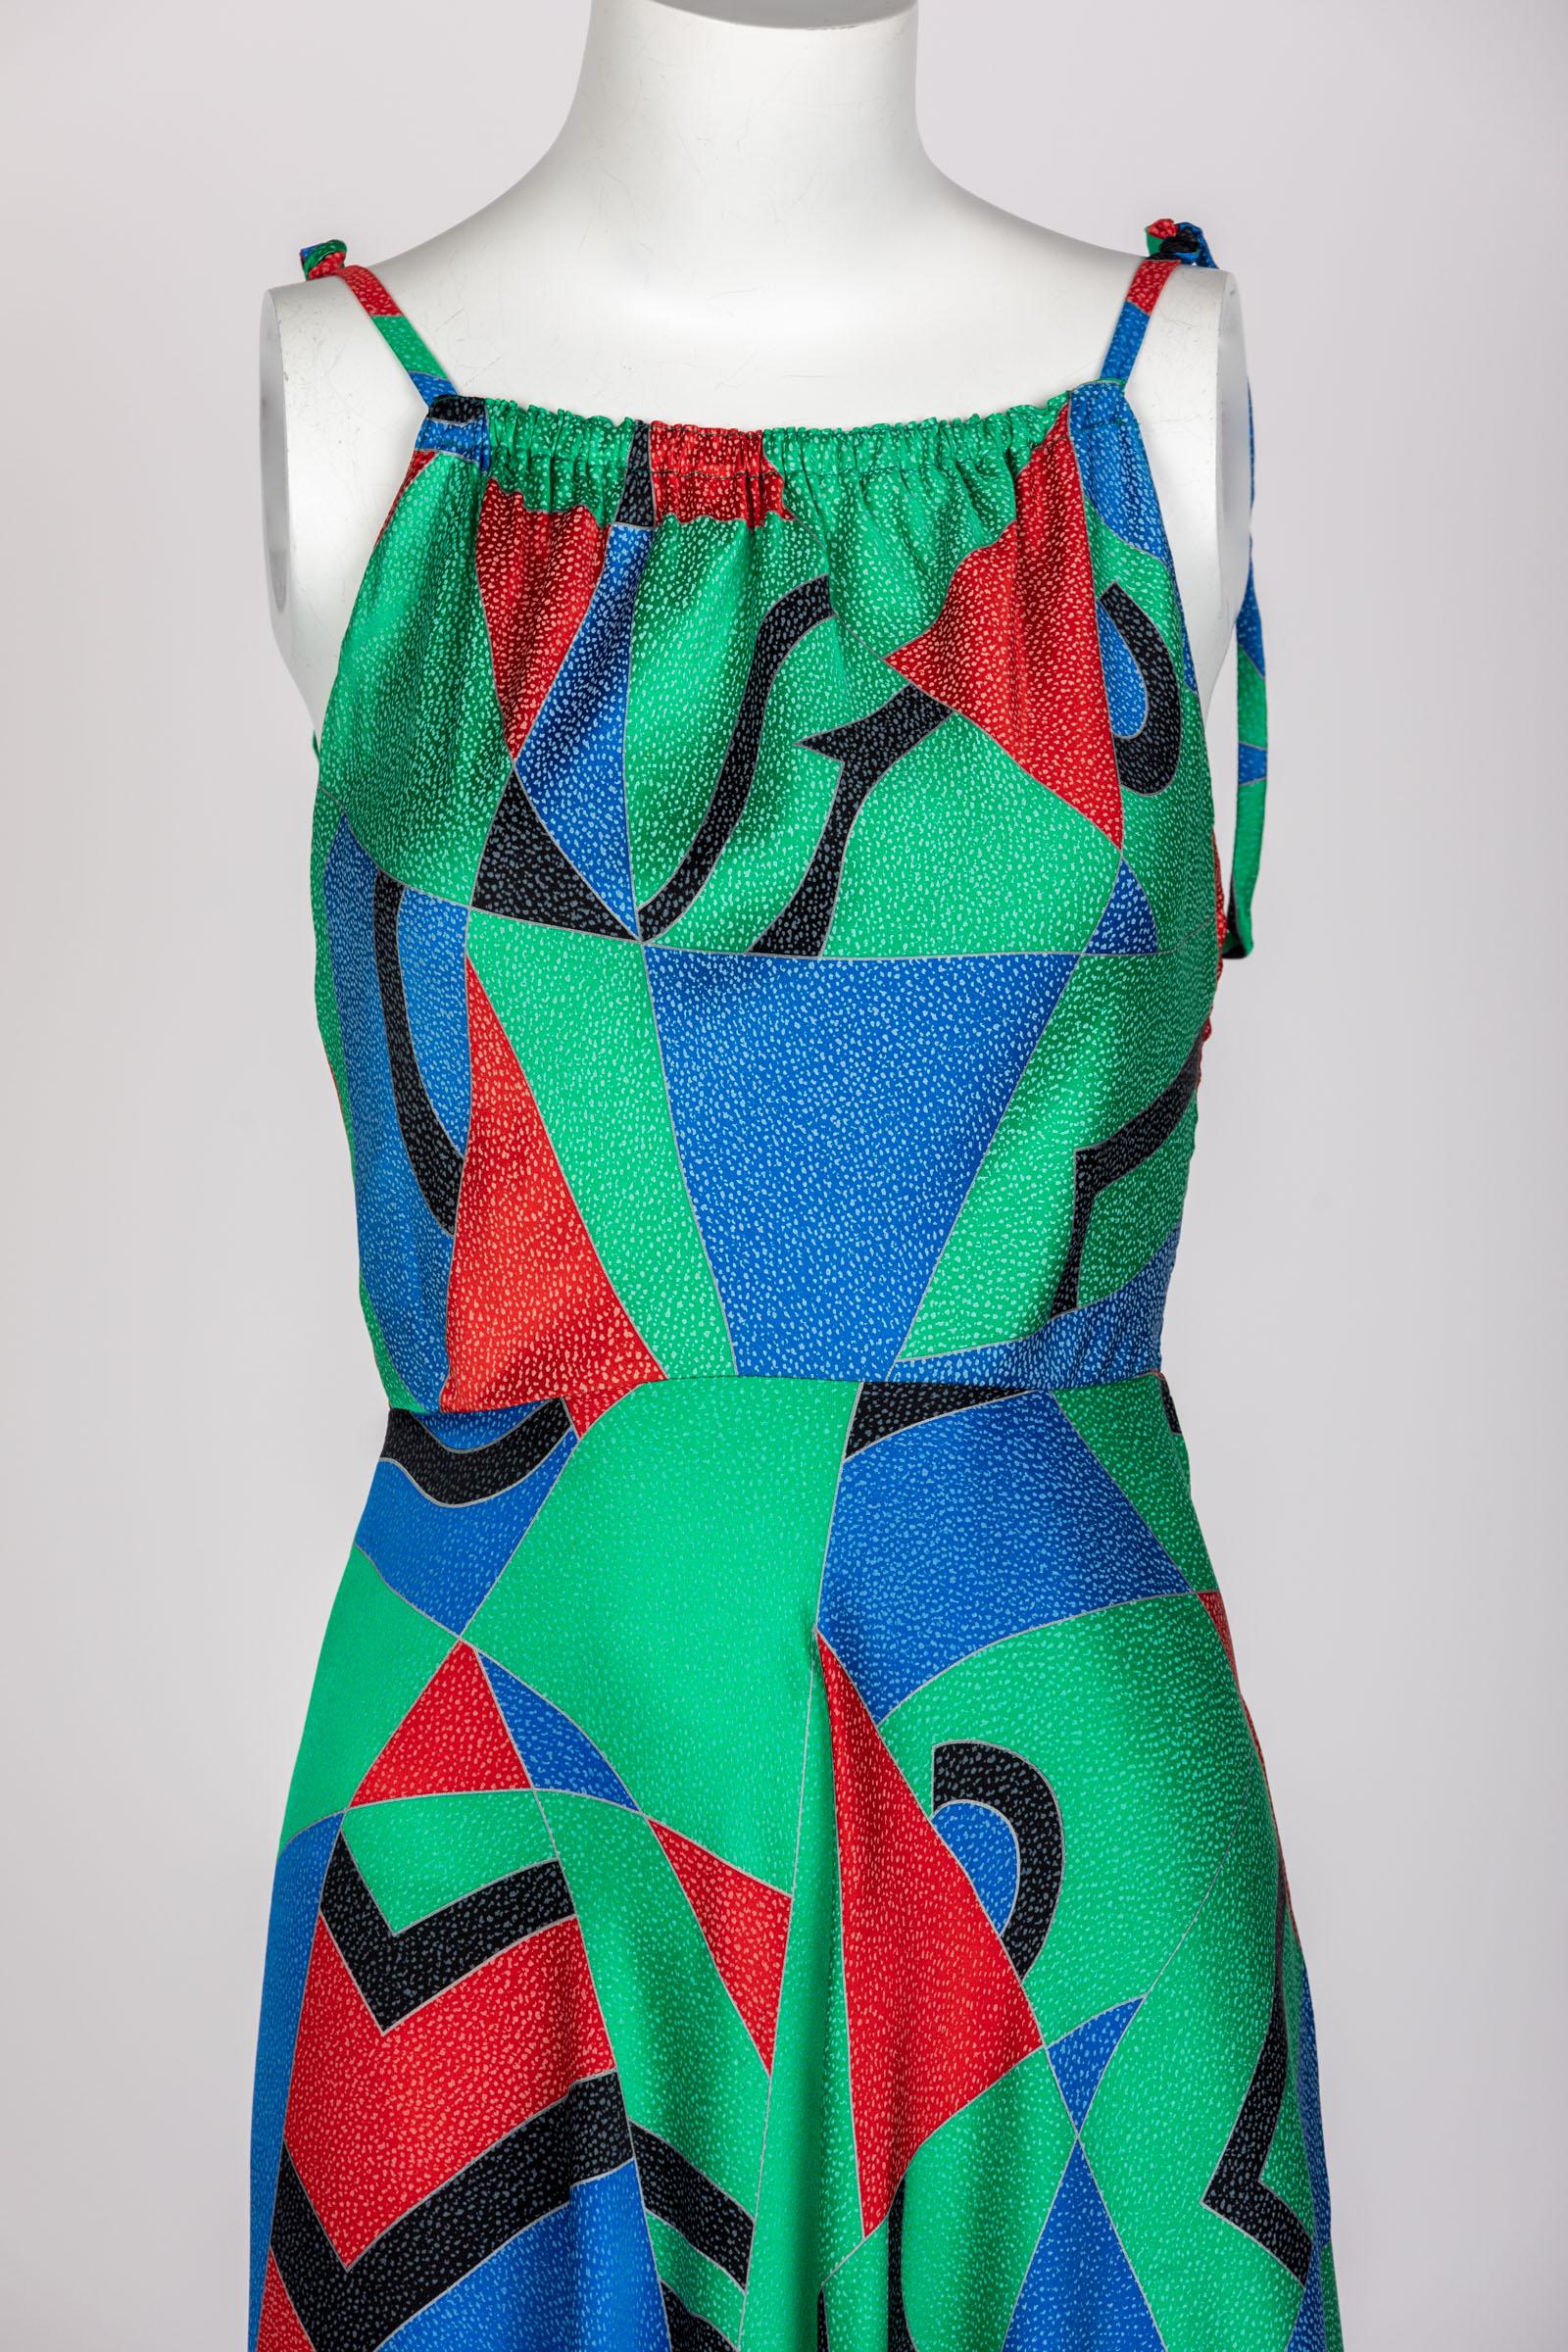 Chloe Karl Lagerfeld Cubist Green Silk Print Sleeveless Dress, 1970s 1